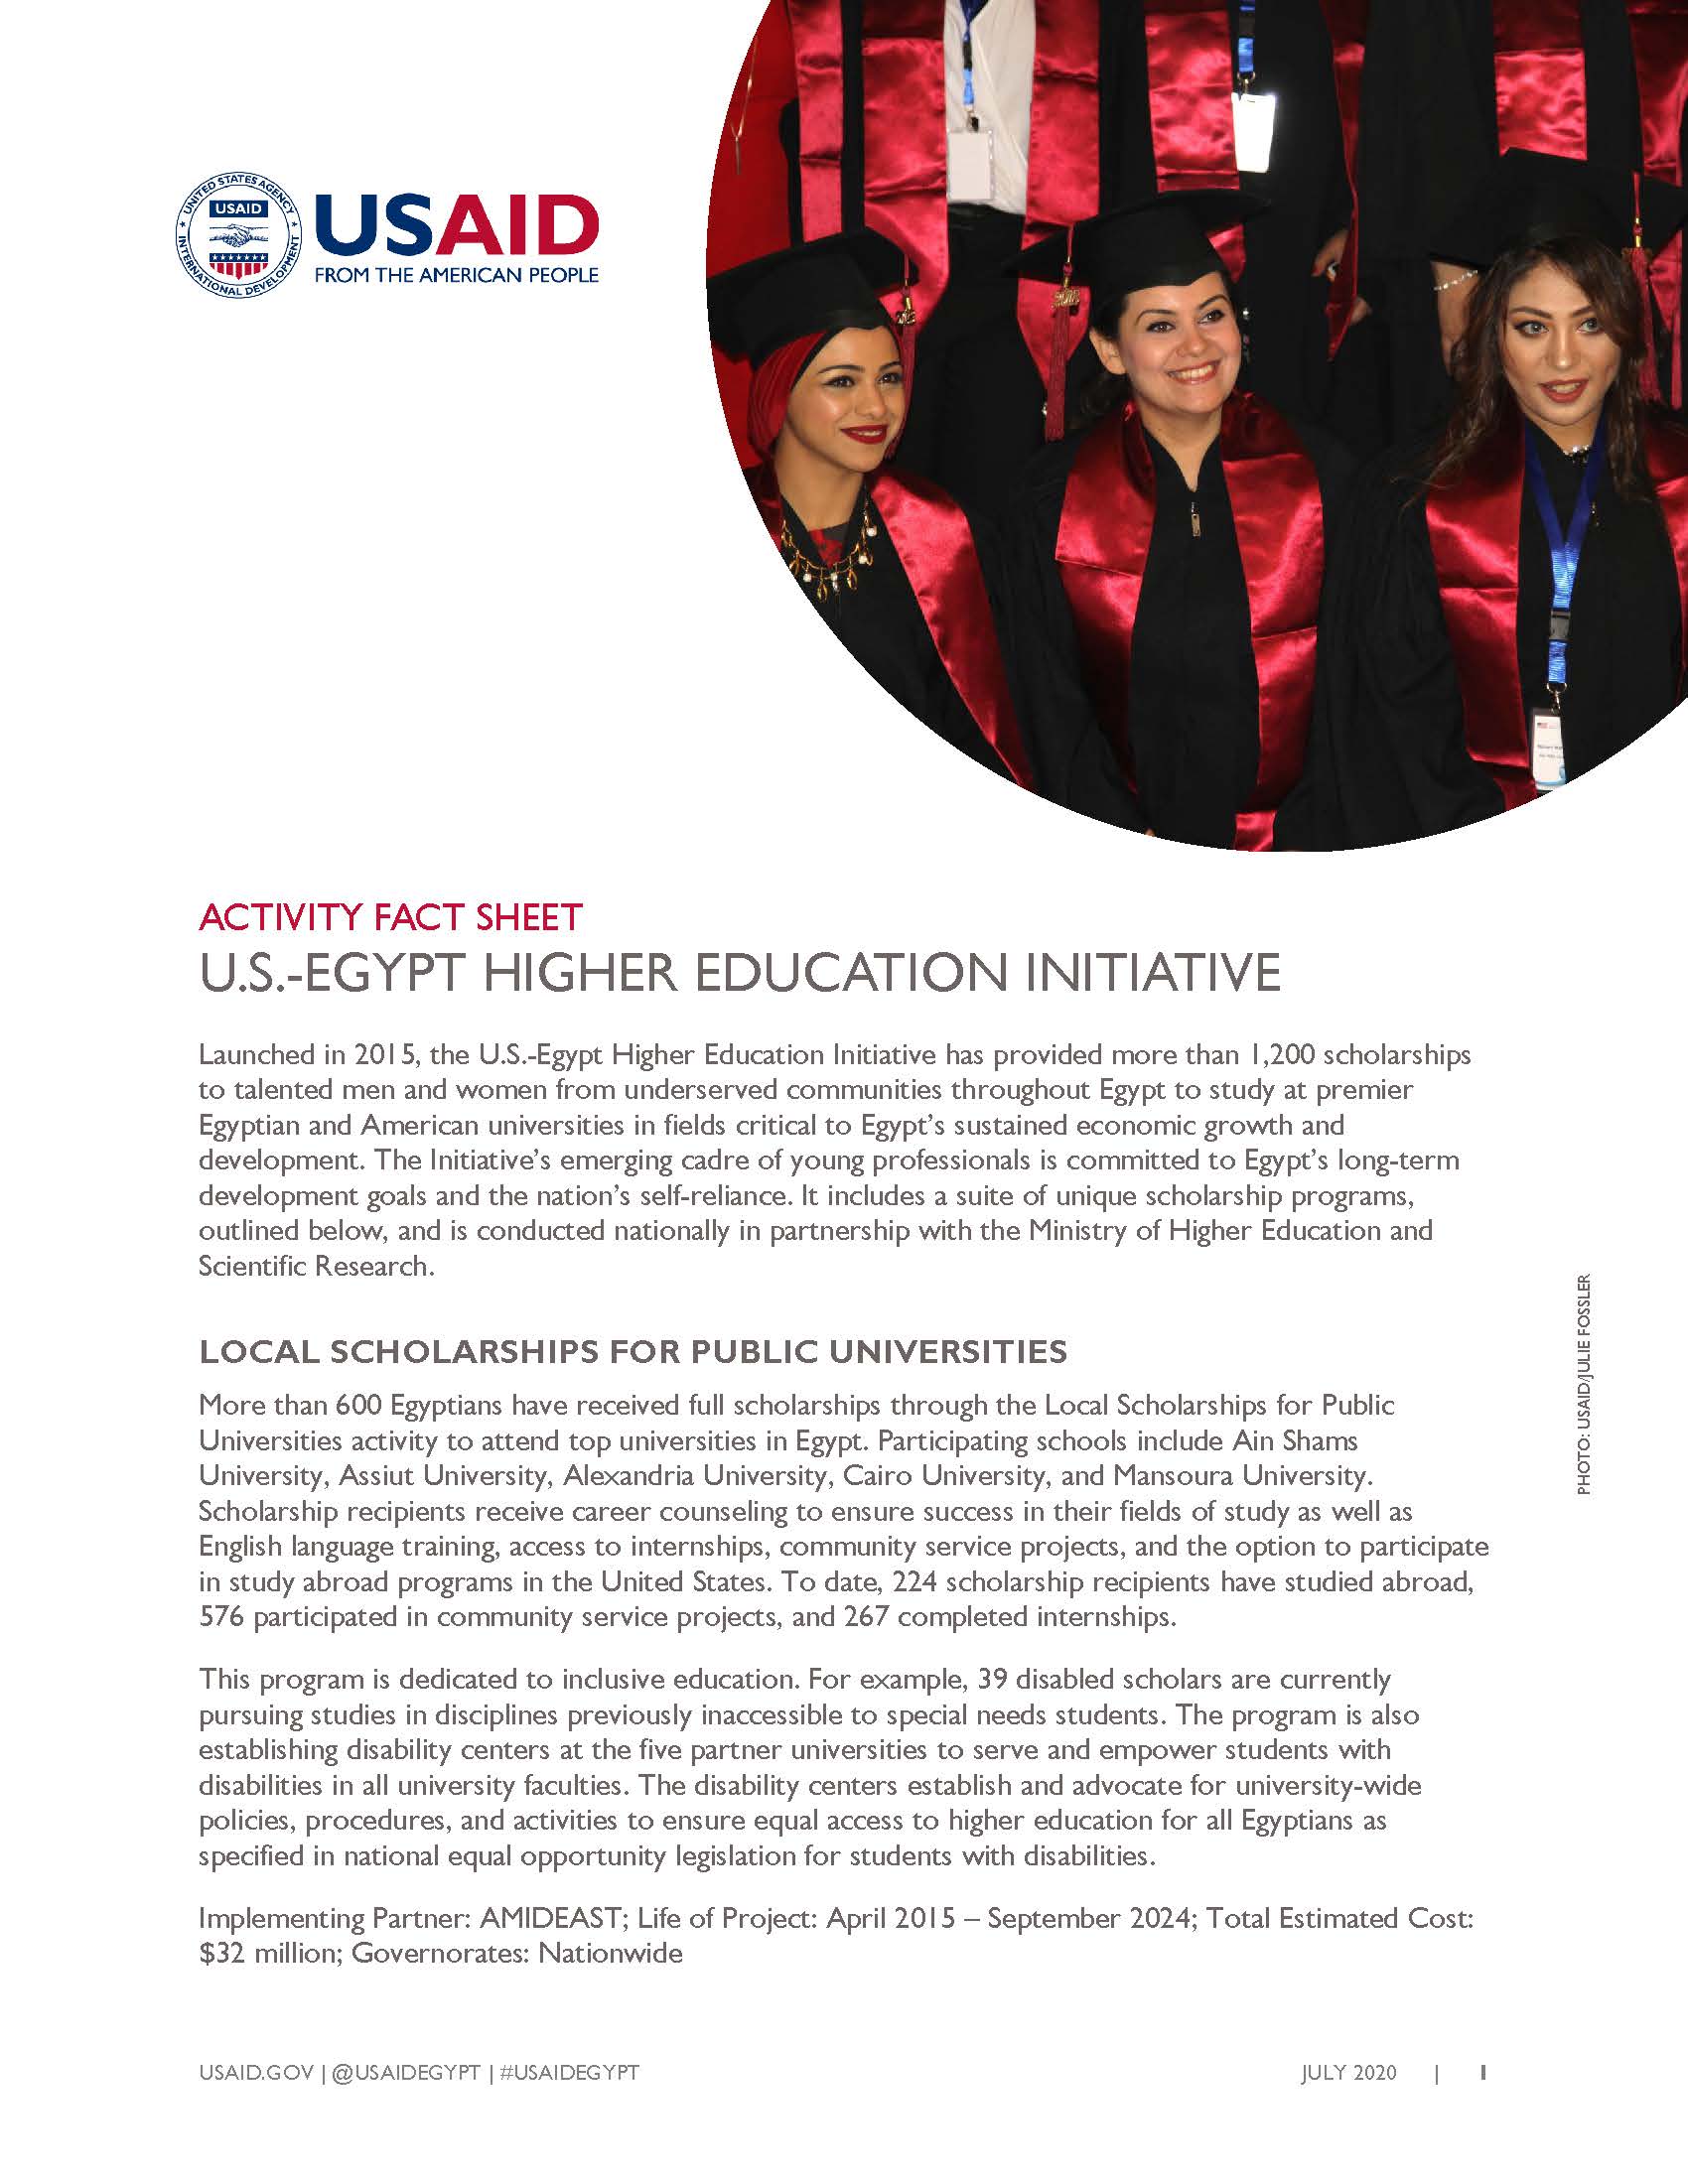 USAID/Egypt Activity Fact Sheet: U.S.-Egypt Higher Education Initiative